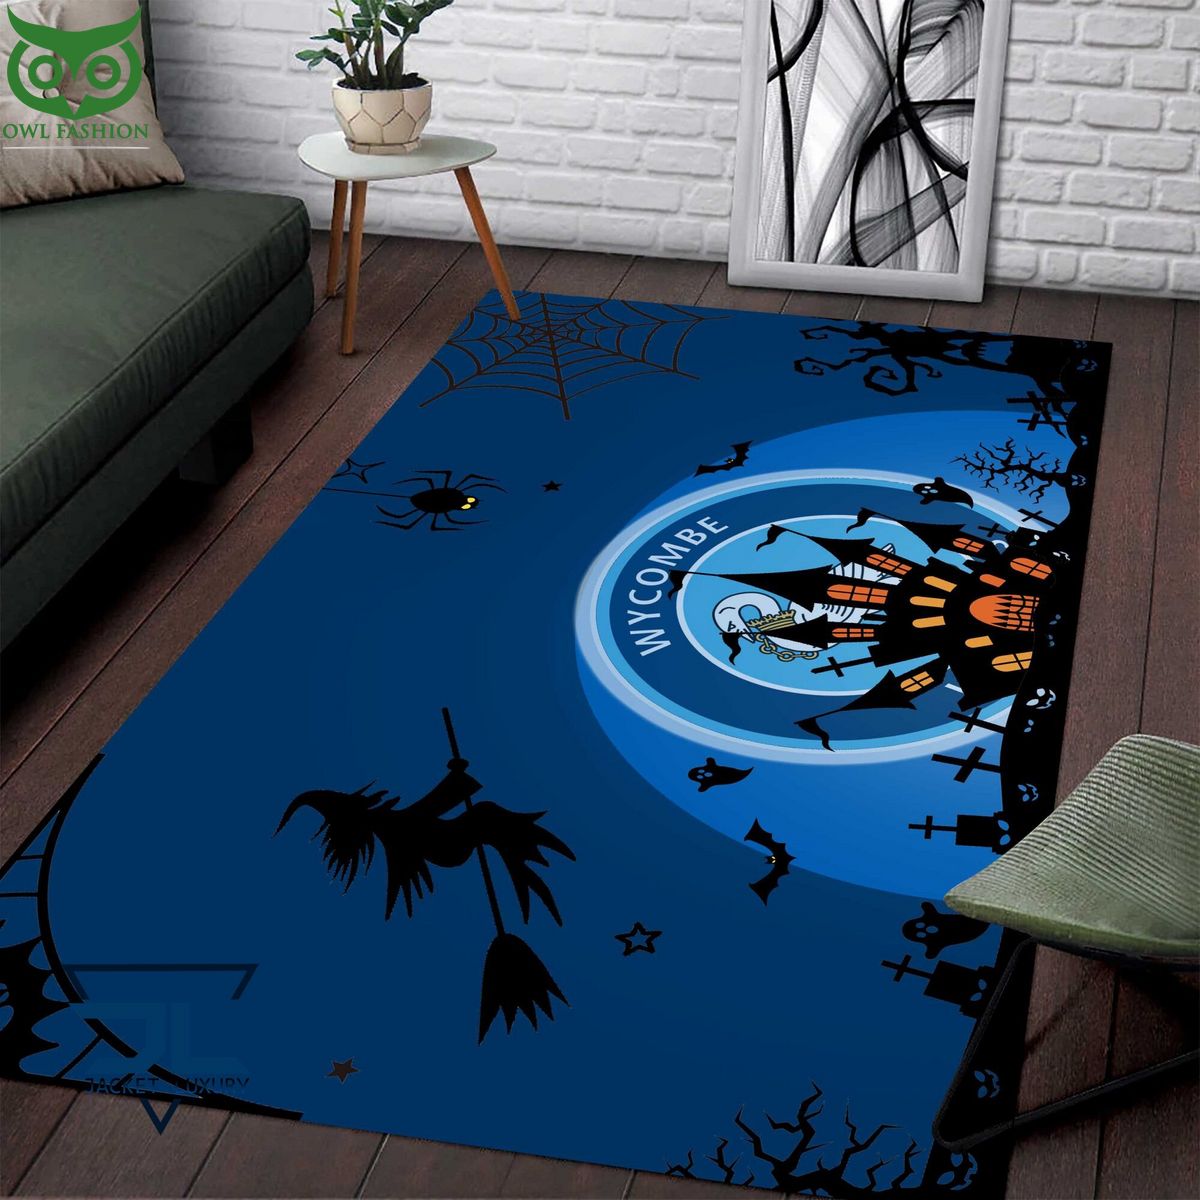 wycombe wanderers f c efl halloween carpet rug 1 9l9uI.jpg